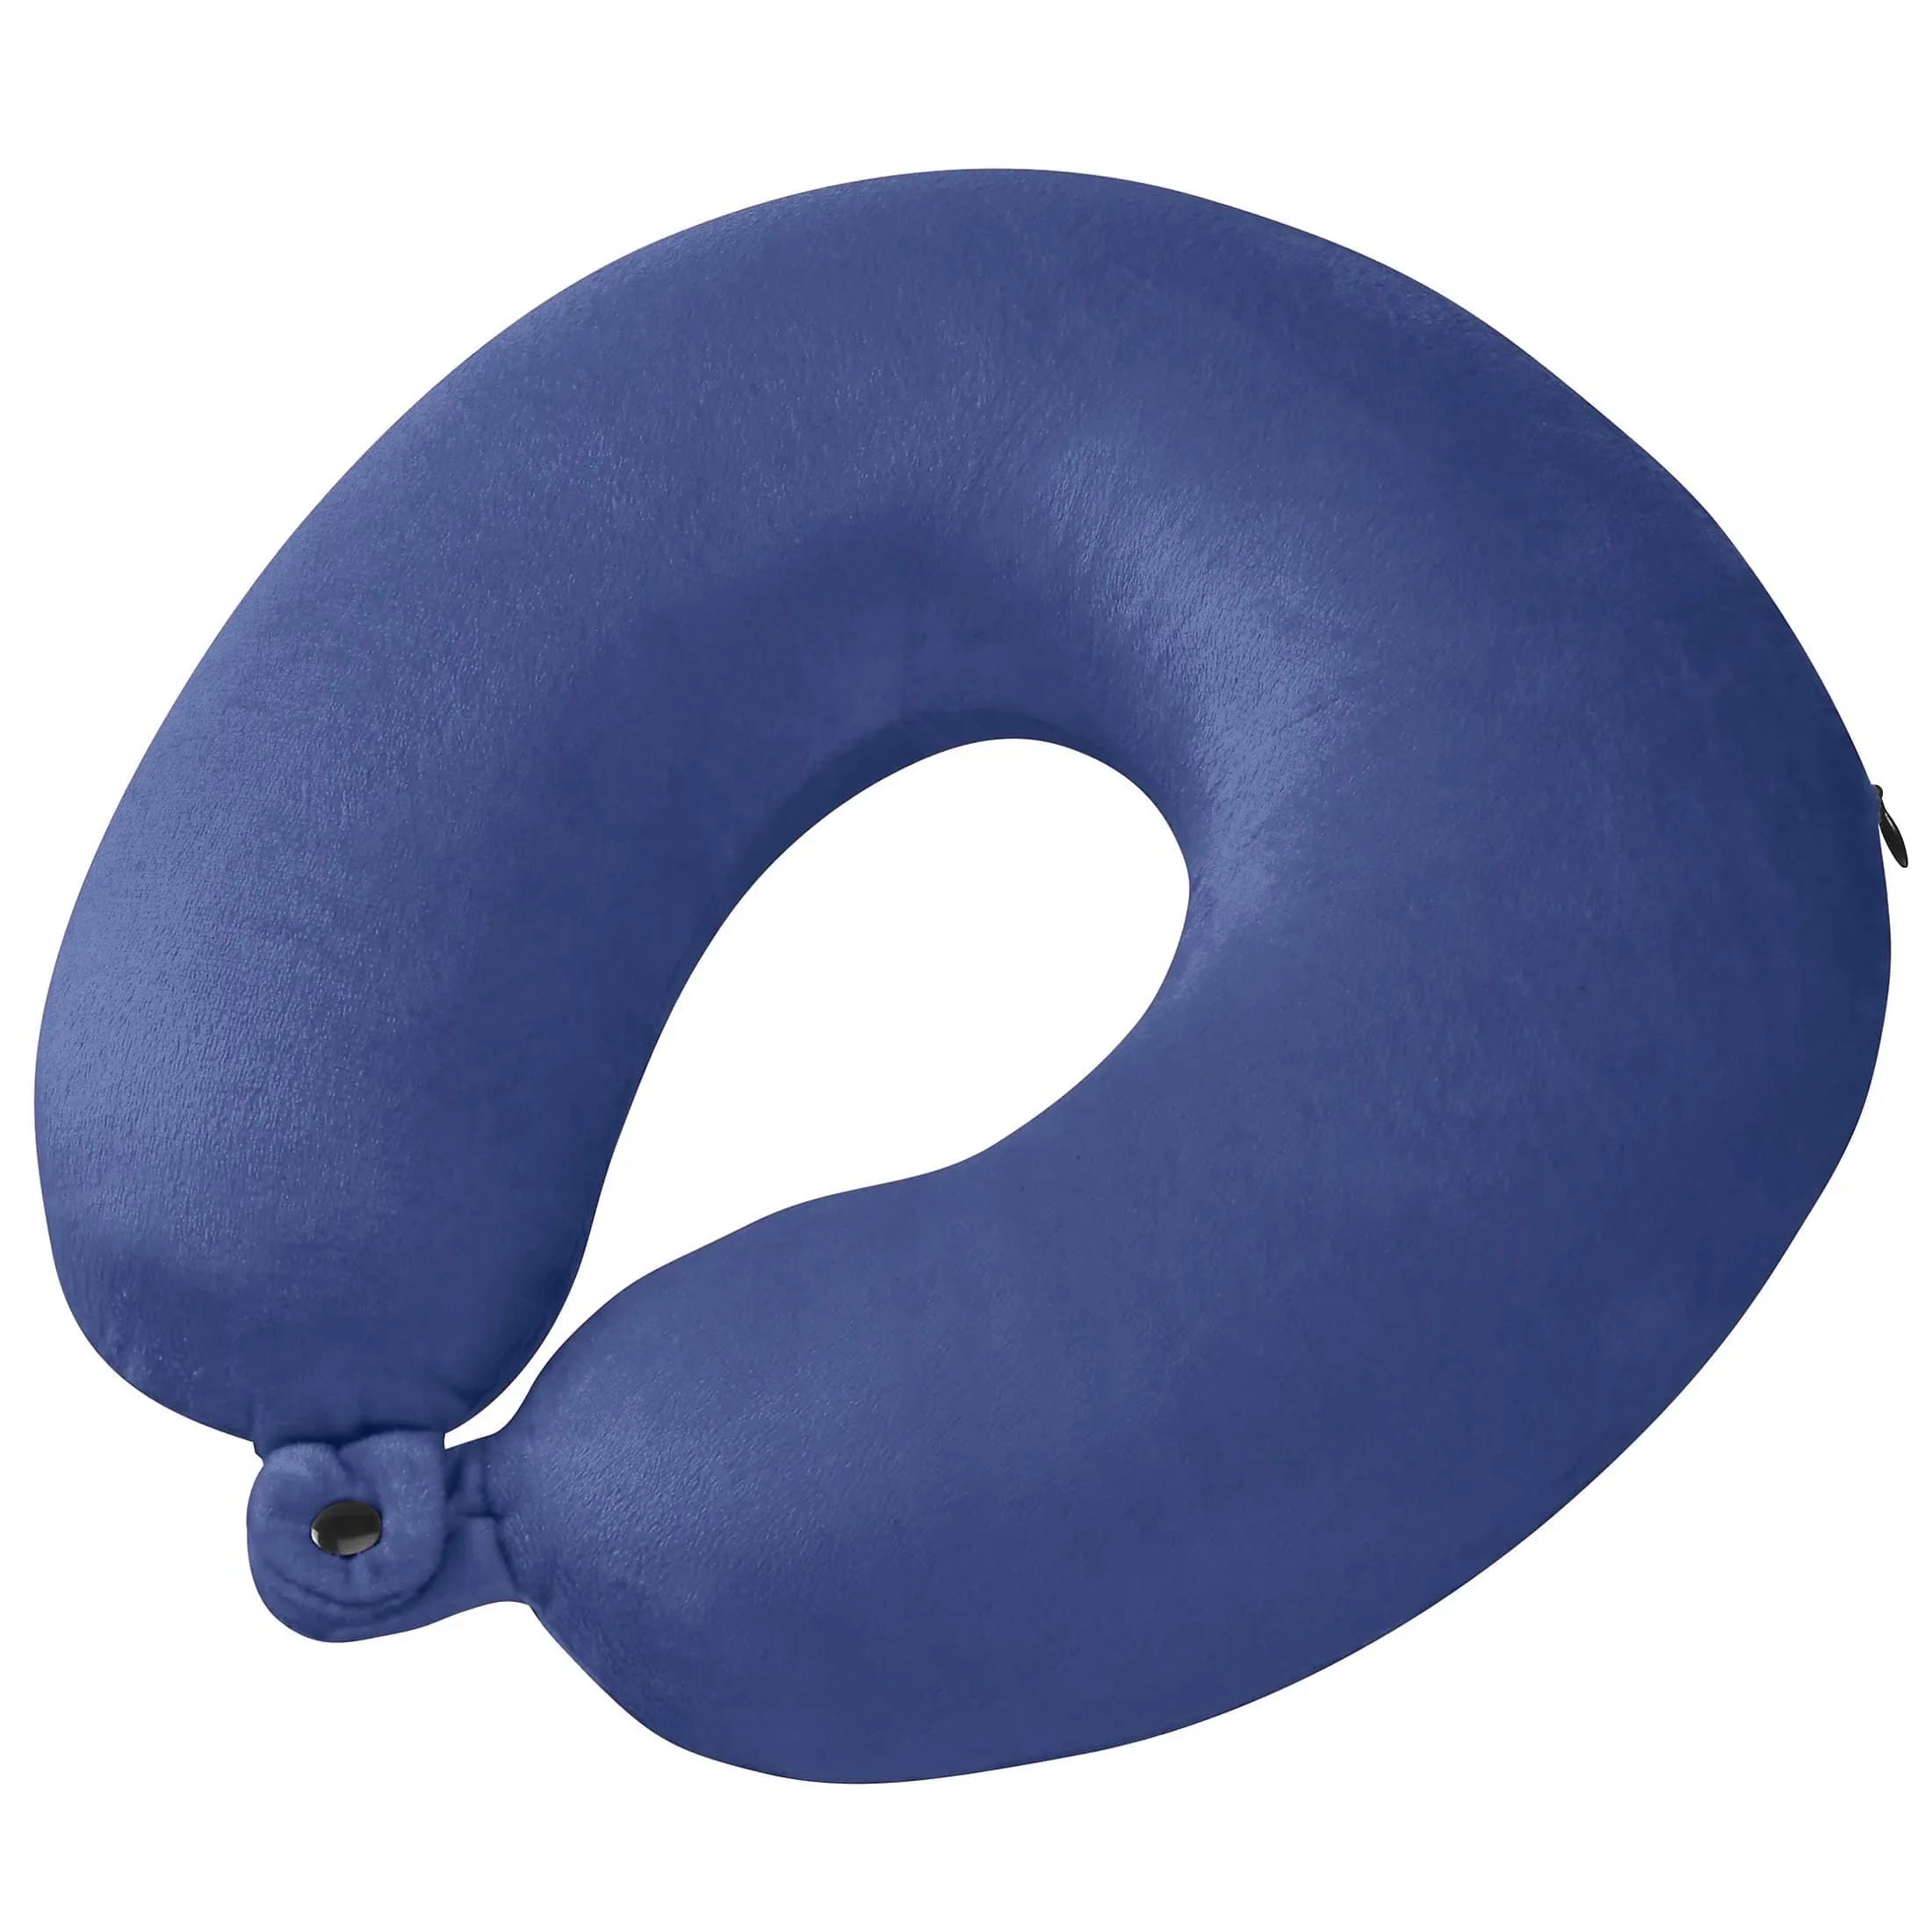 Samsonite Travel Accessories Memory Foam Pillow 30 cm - midnight blue